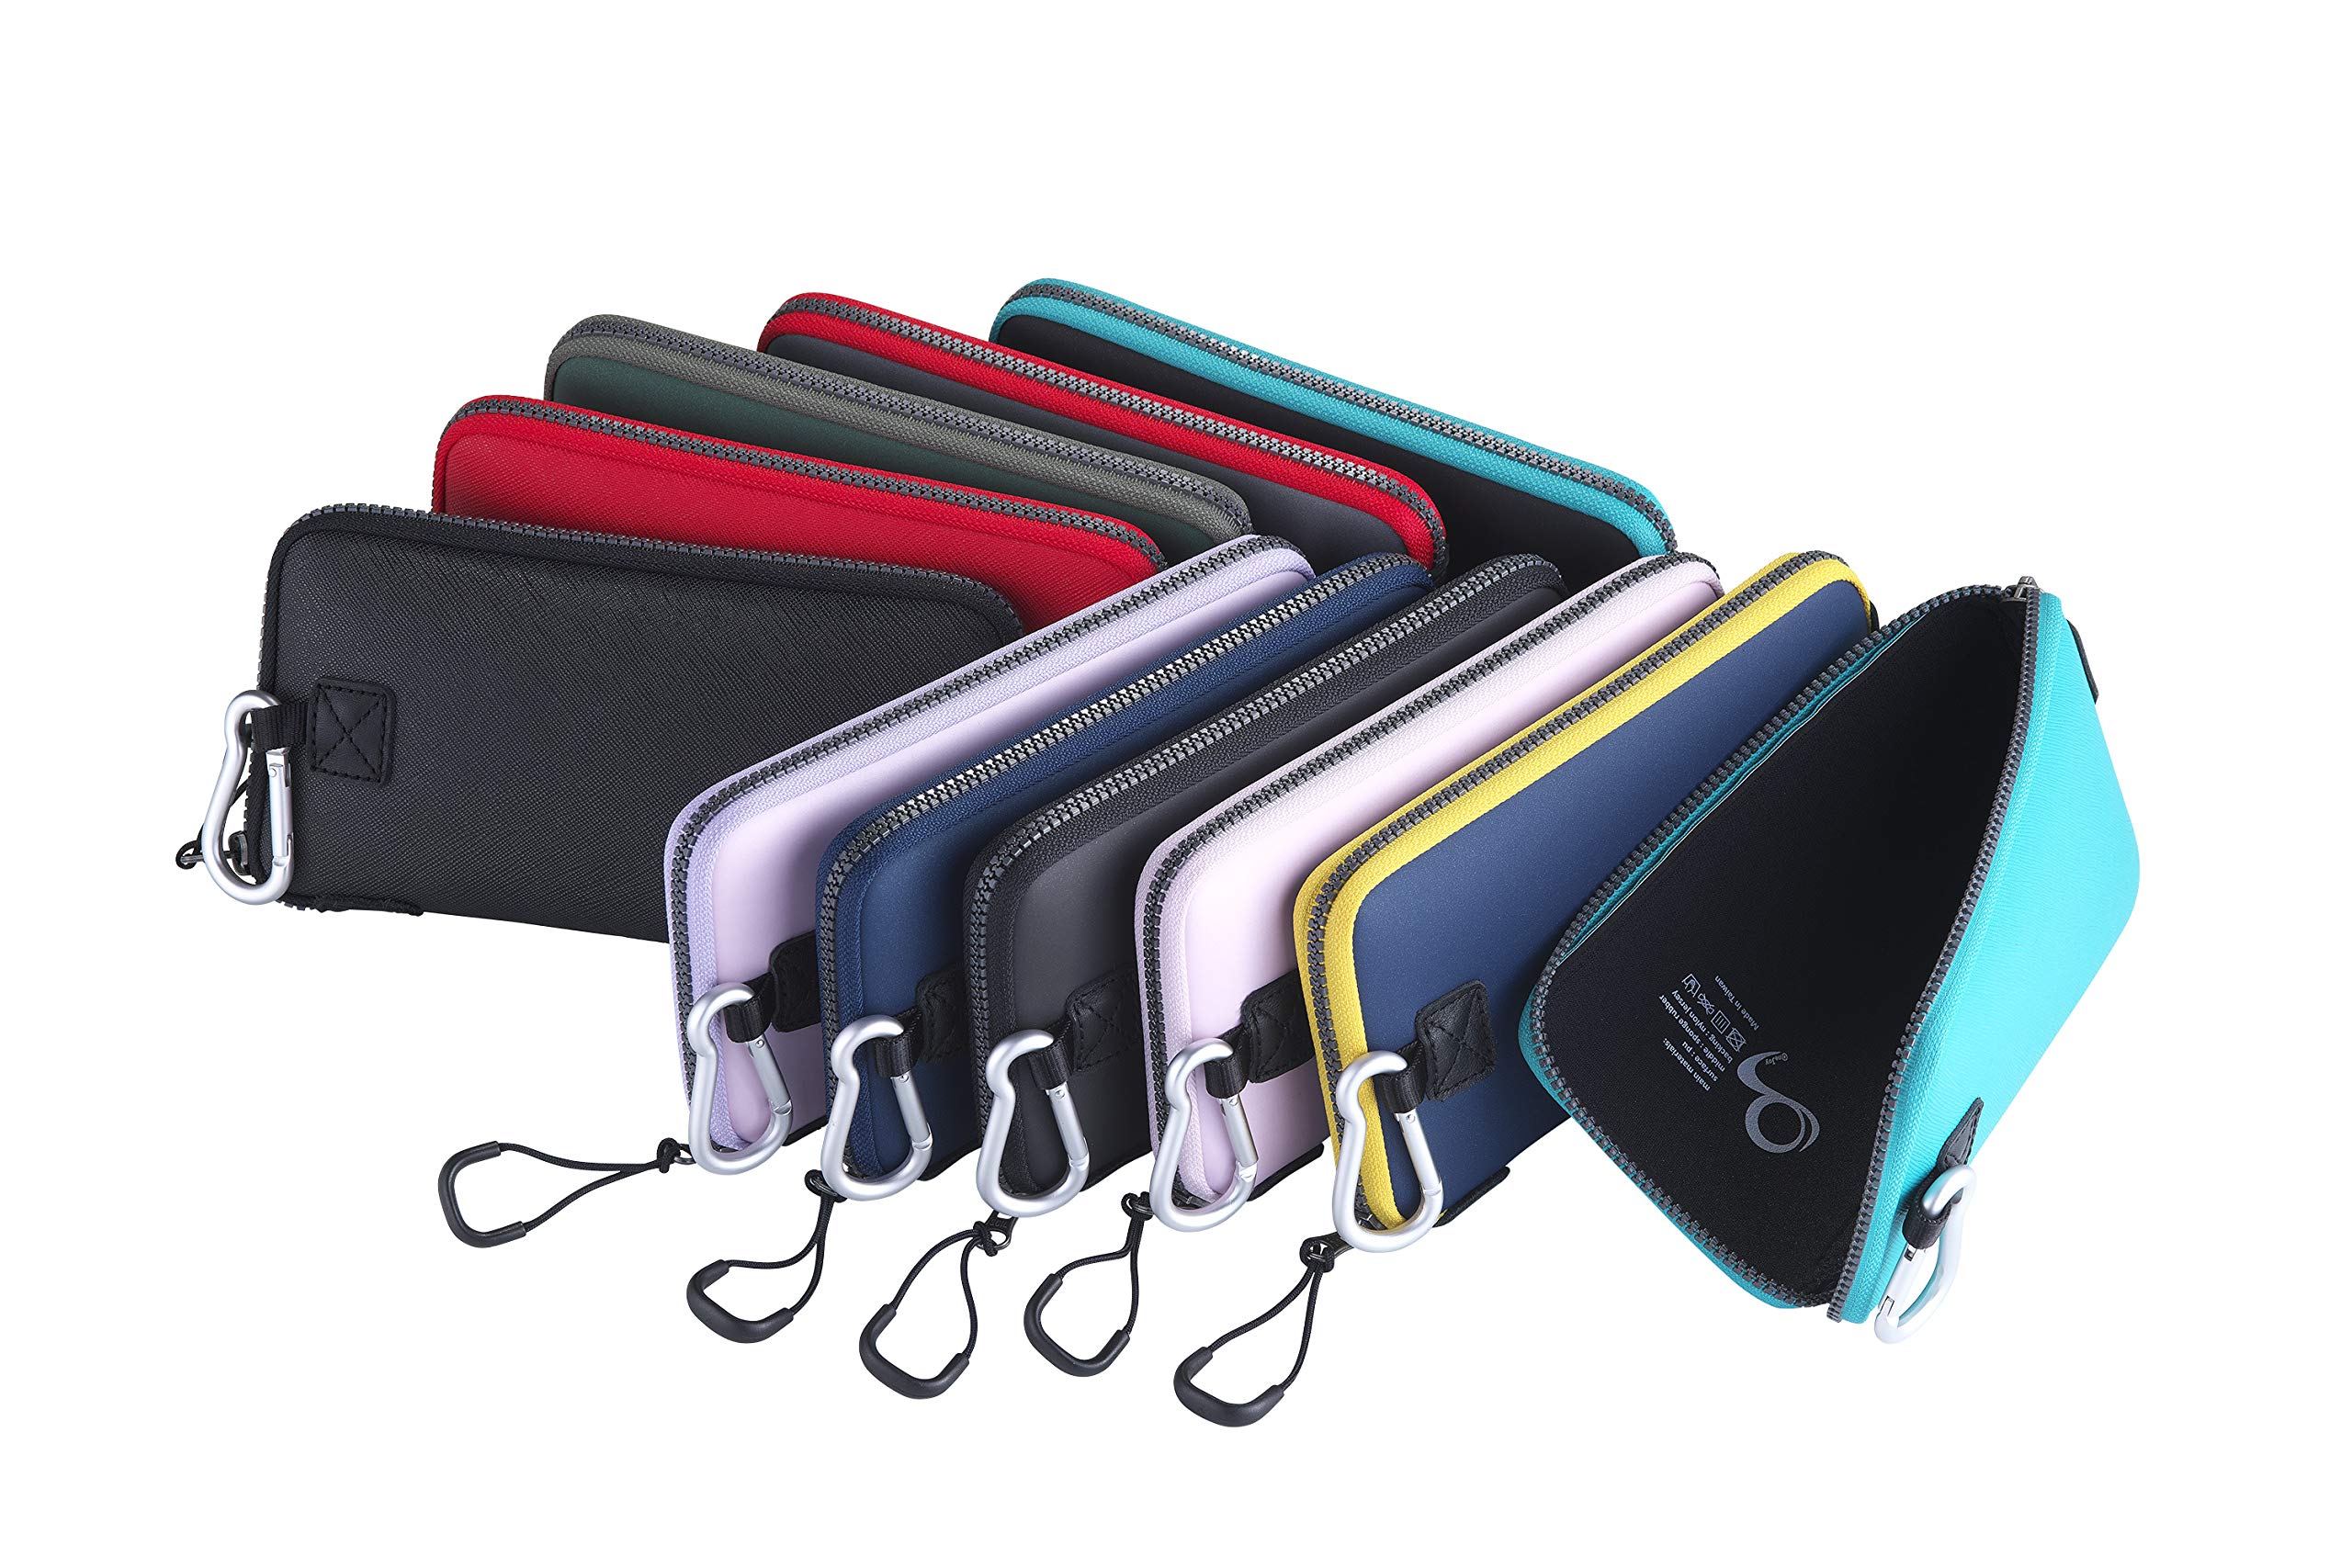 OneJoy Zippered Phone Pouch, Phone Bag, Mobile Pouch, Waterproof Phone Pouch, Bike Pouch with Zipper AJ10-098,17cm x 9cm